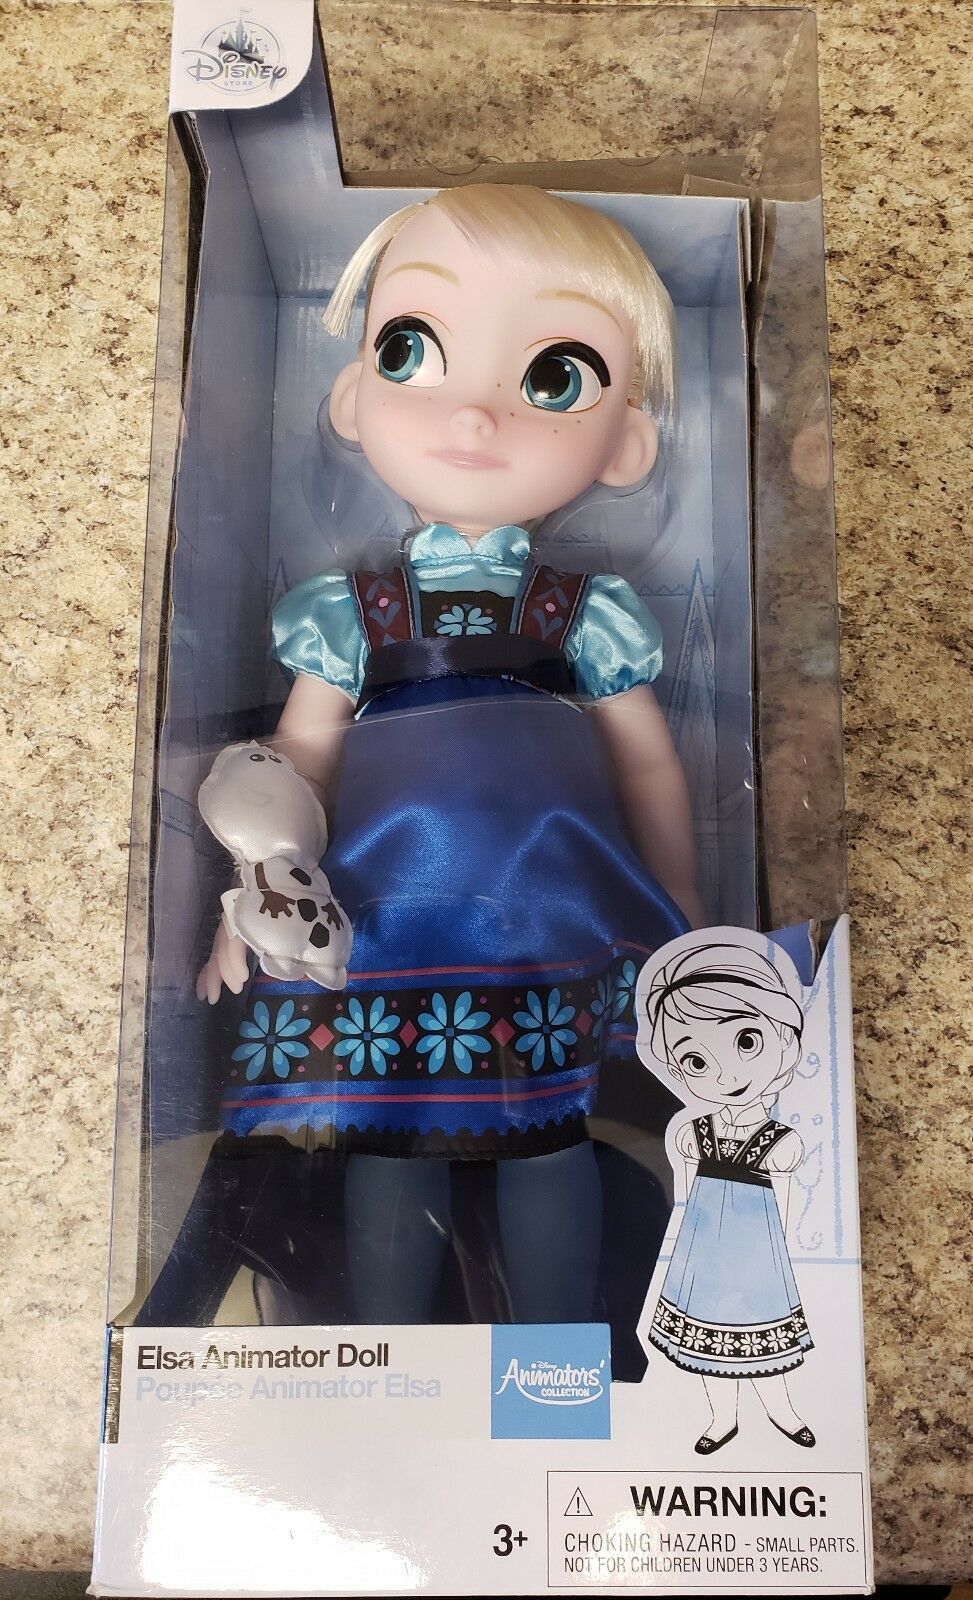 Disney Store Exclusive 16 inch Animator Doll Princess Elsa Frozen Animator's